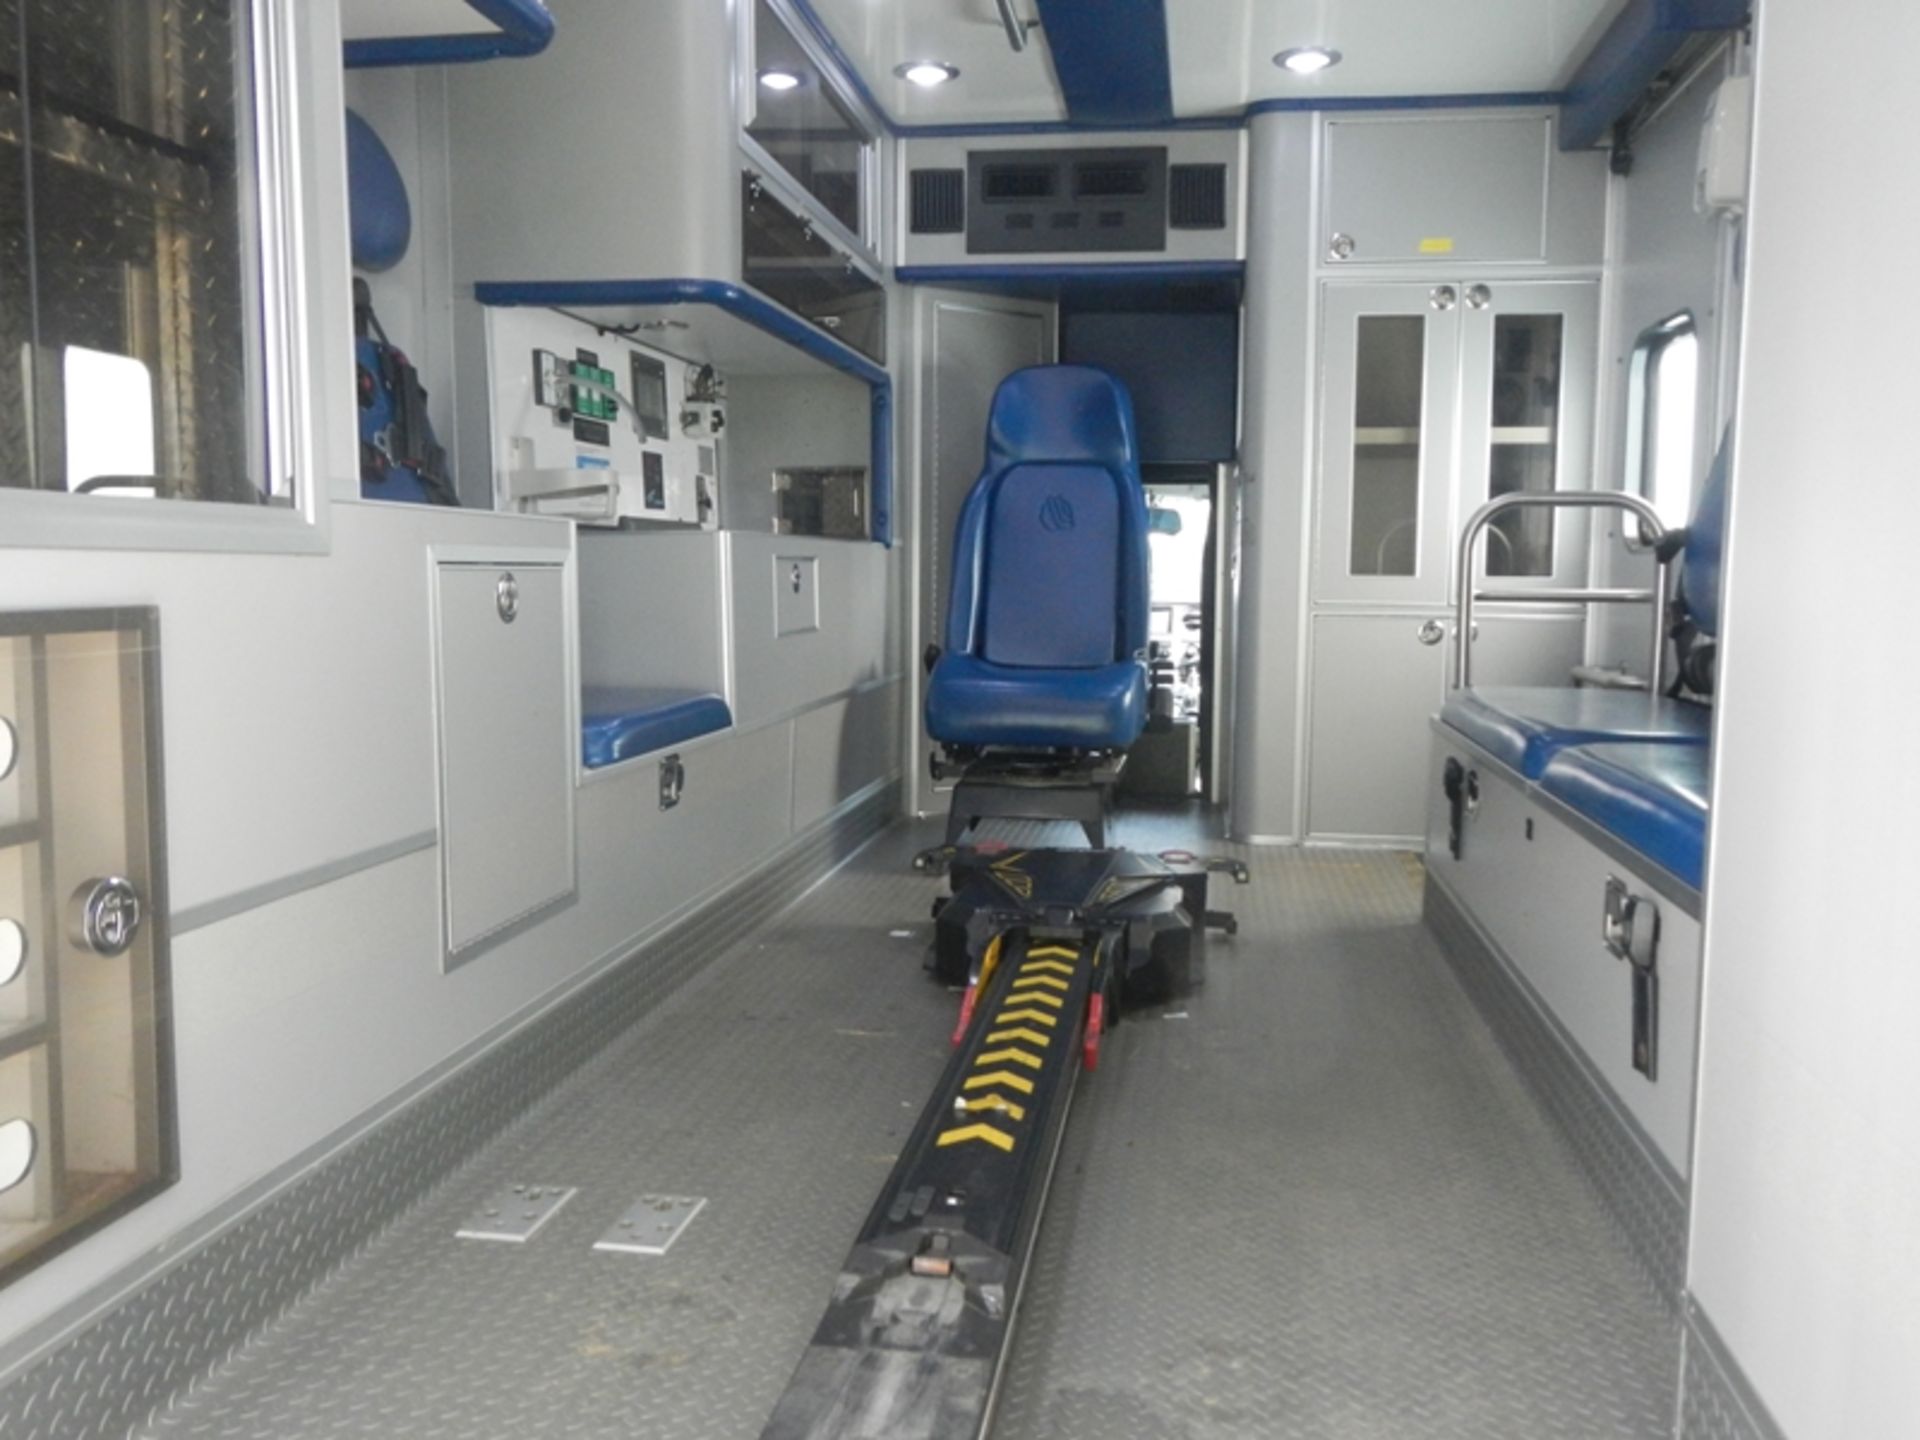 2011 FORD F-450 XLT Type I Ambulance - Image 6 of 6